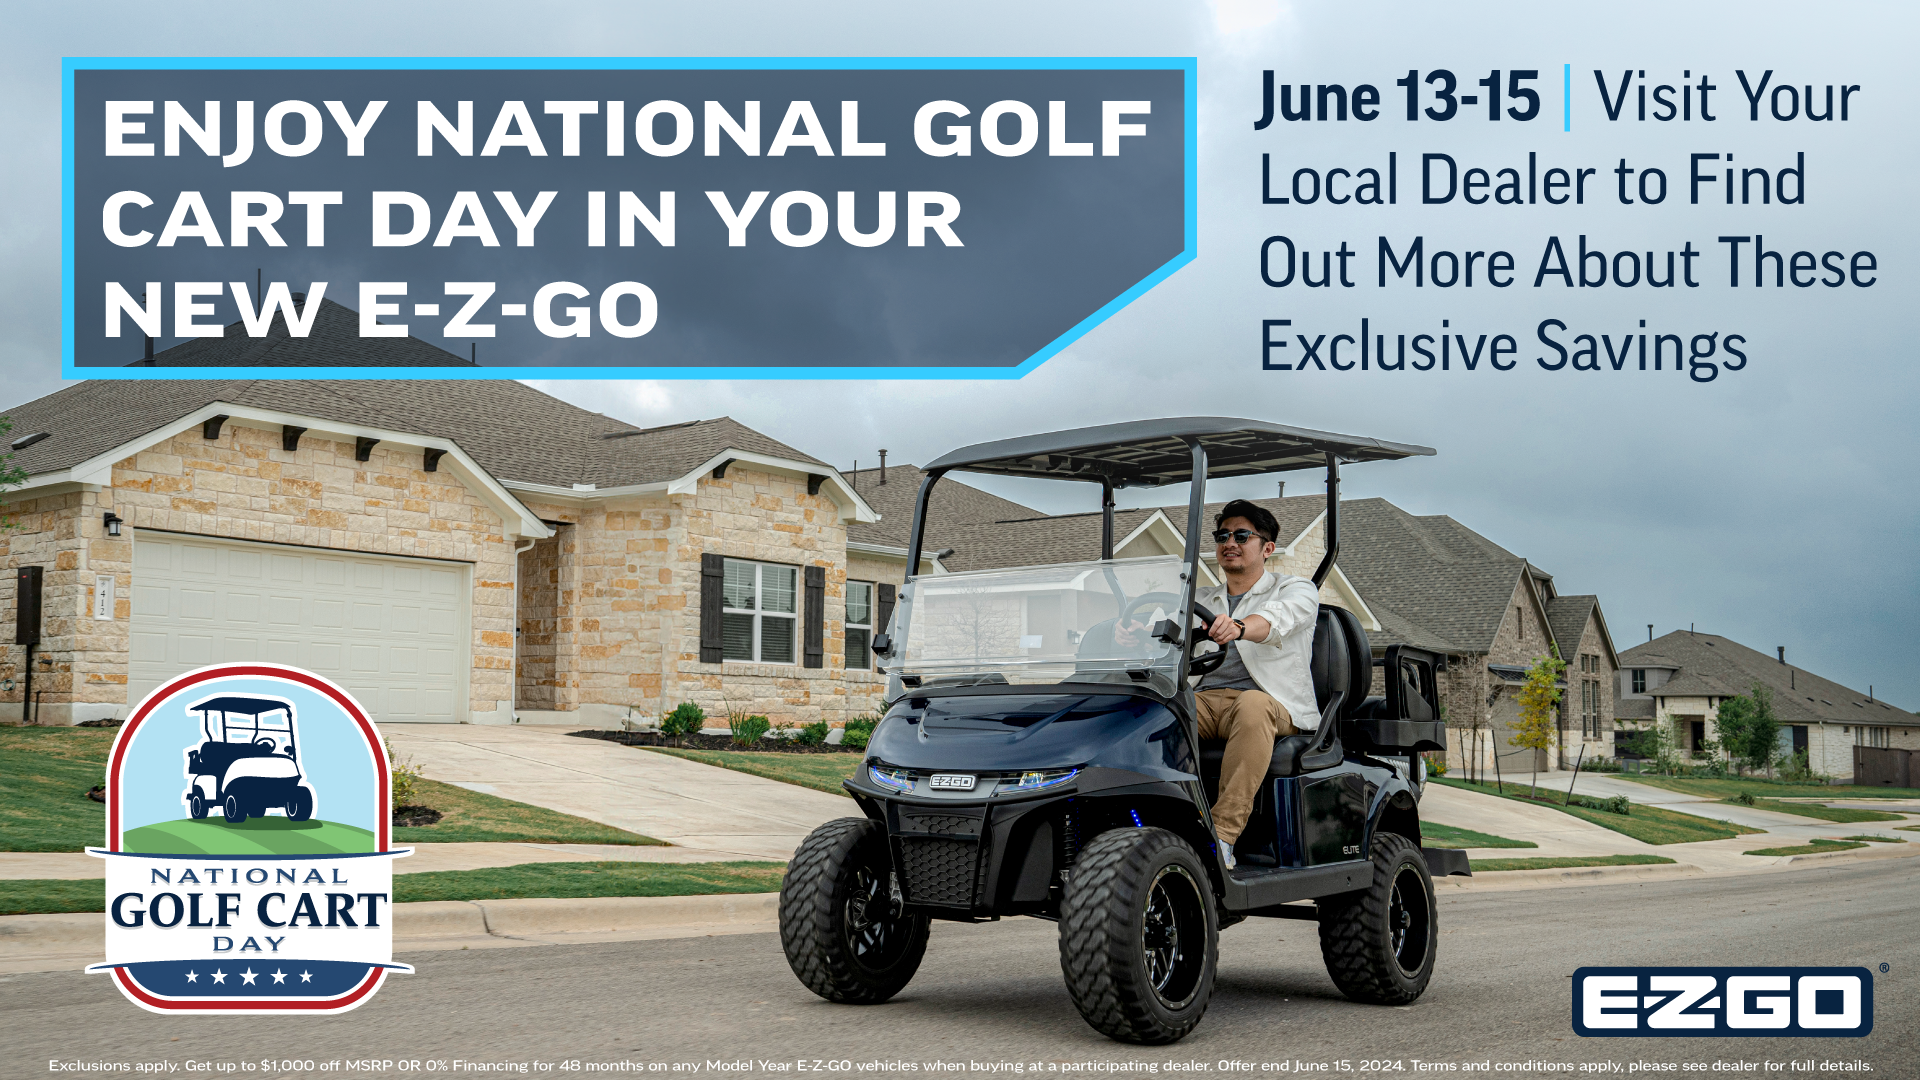 E-Z-GO National Golf Cart Day